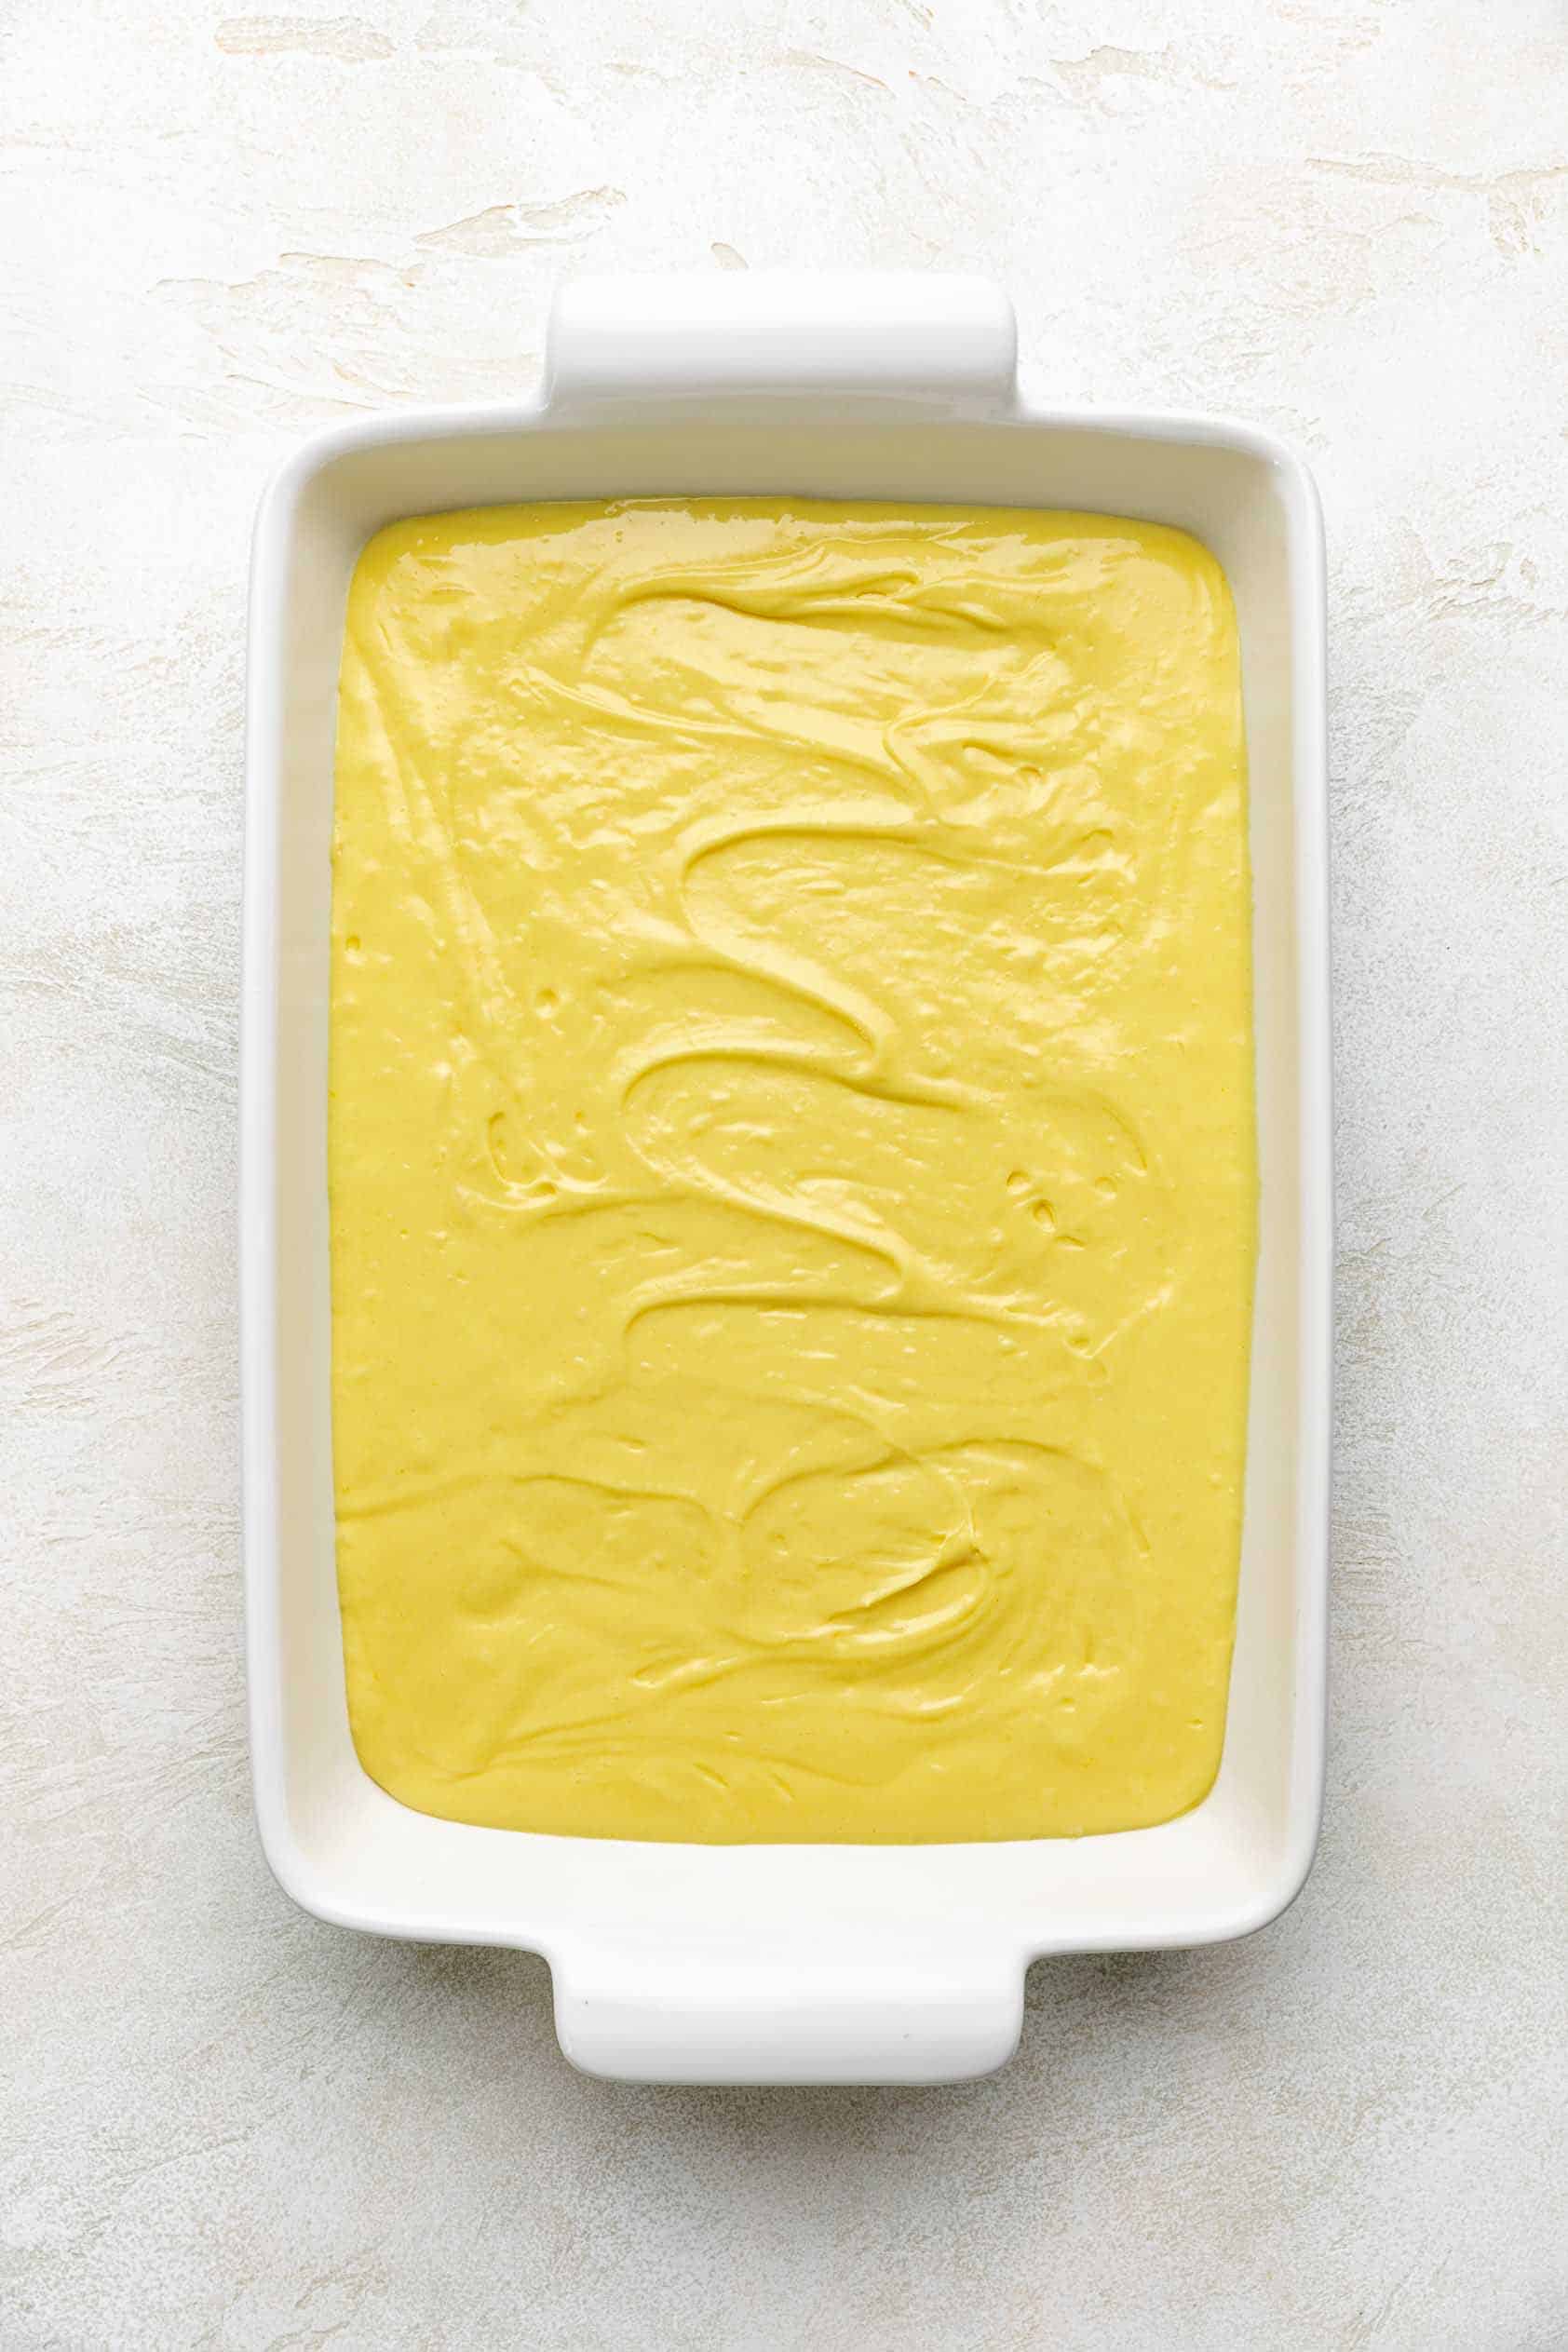 Lemon cake batter in a pan.